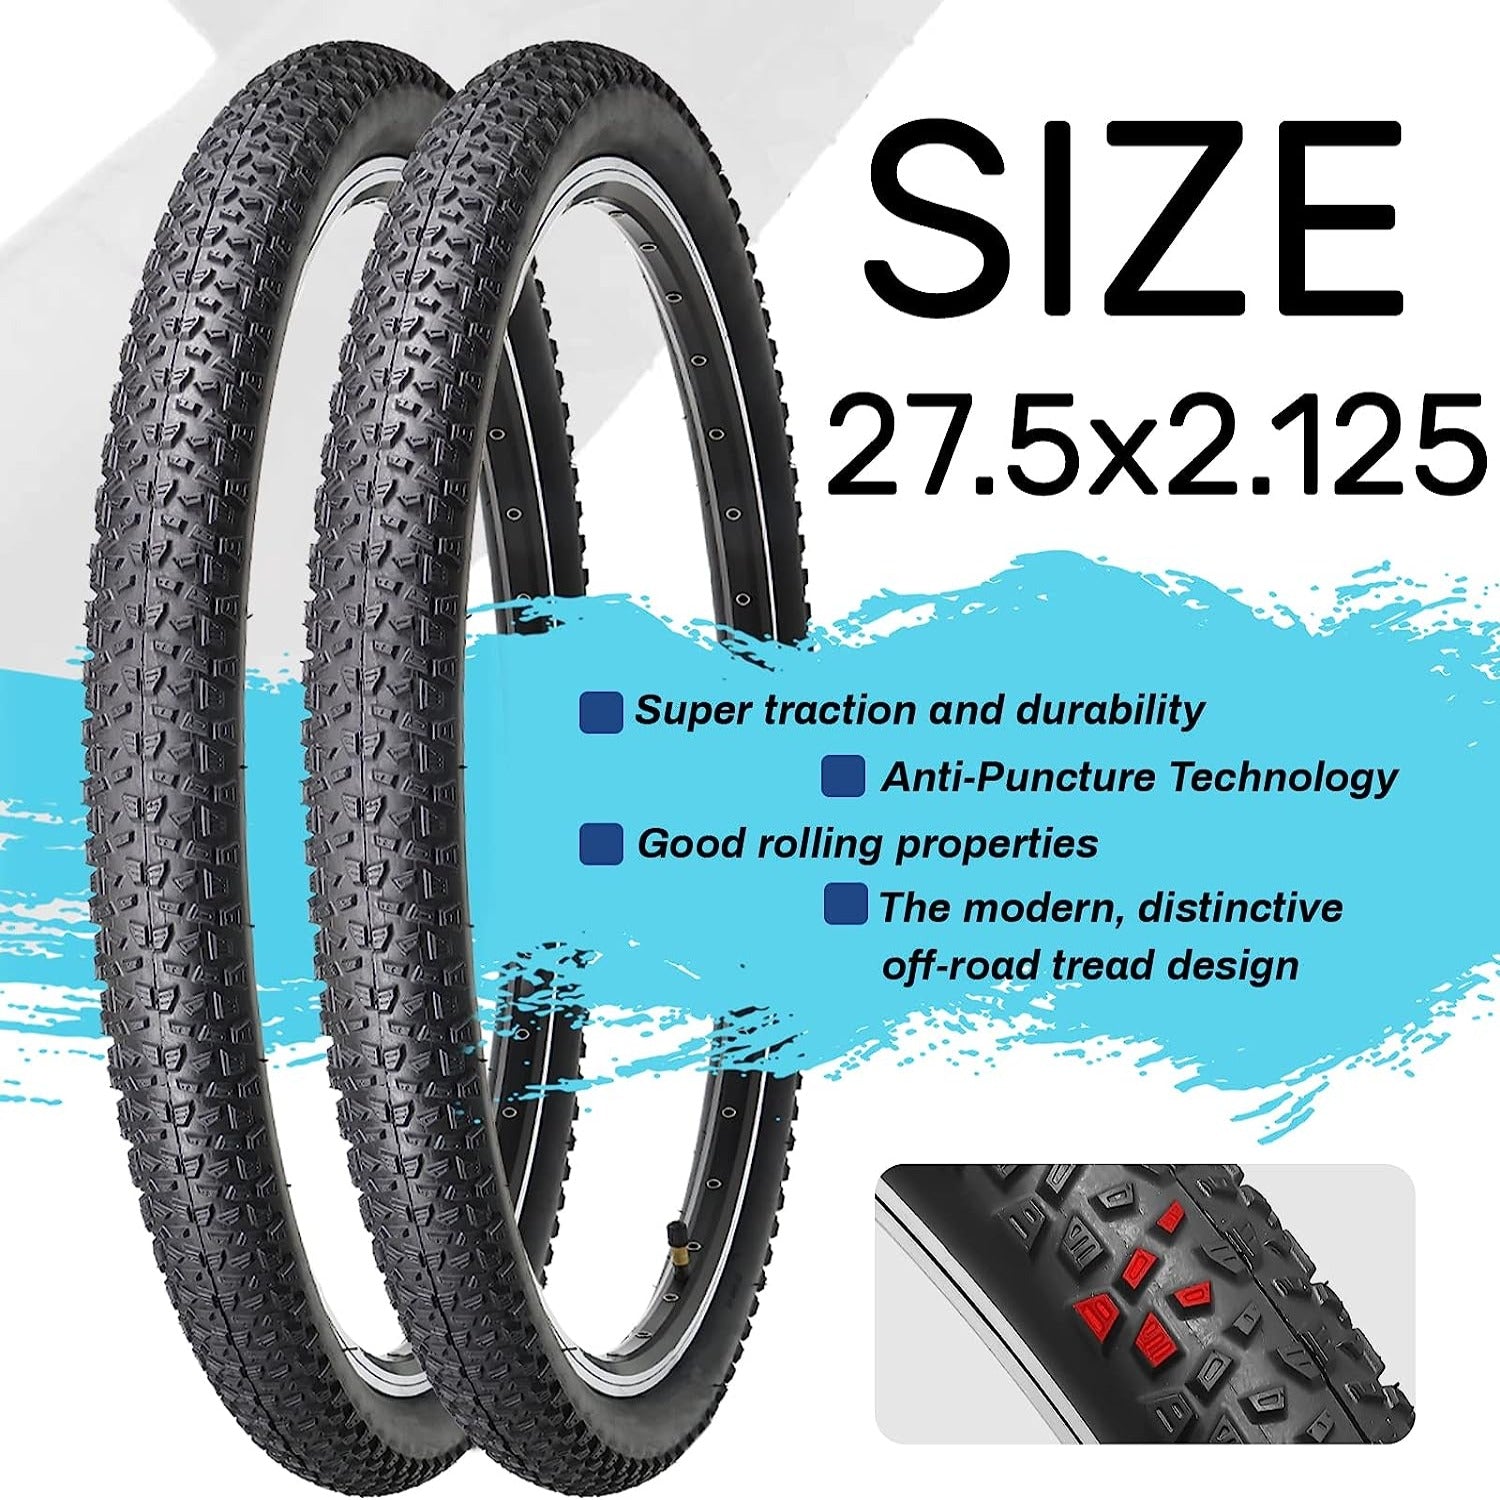 27.5x2.125 inch bike tire tire tread pattern